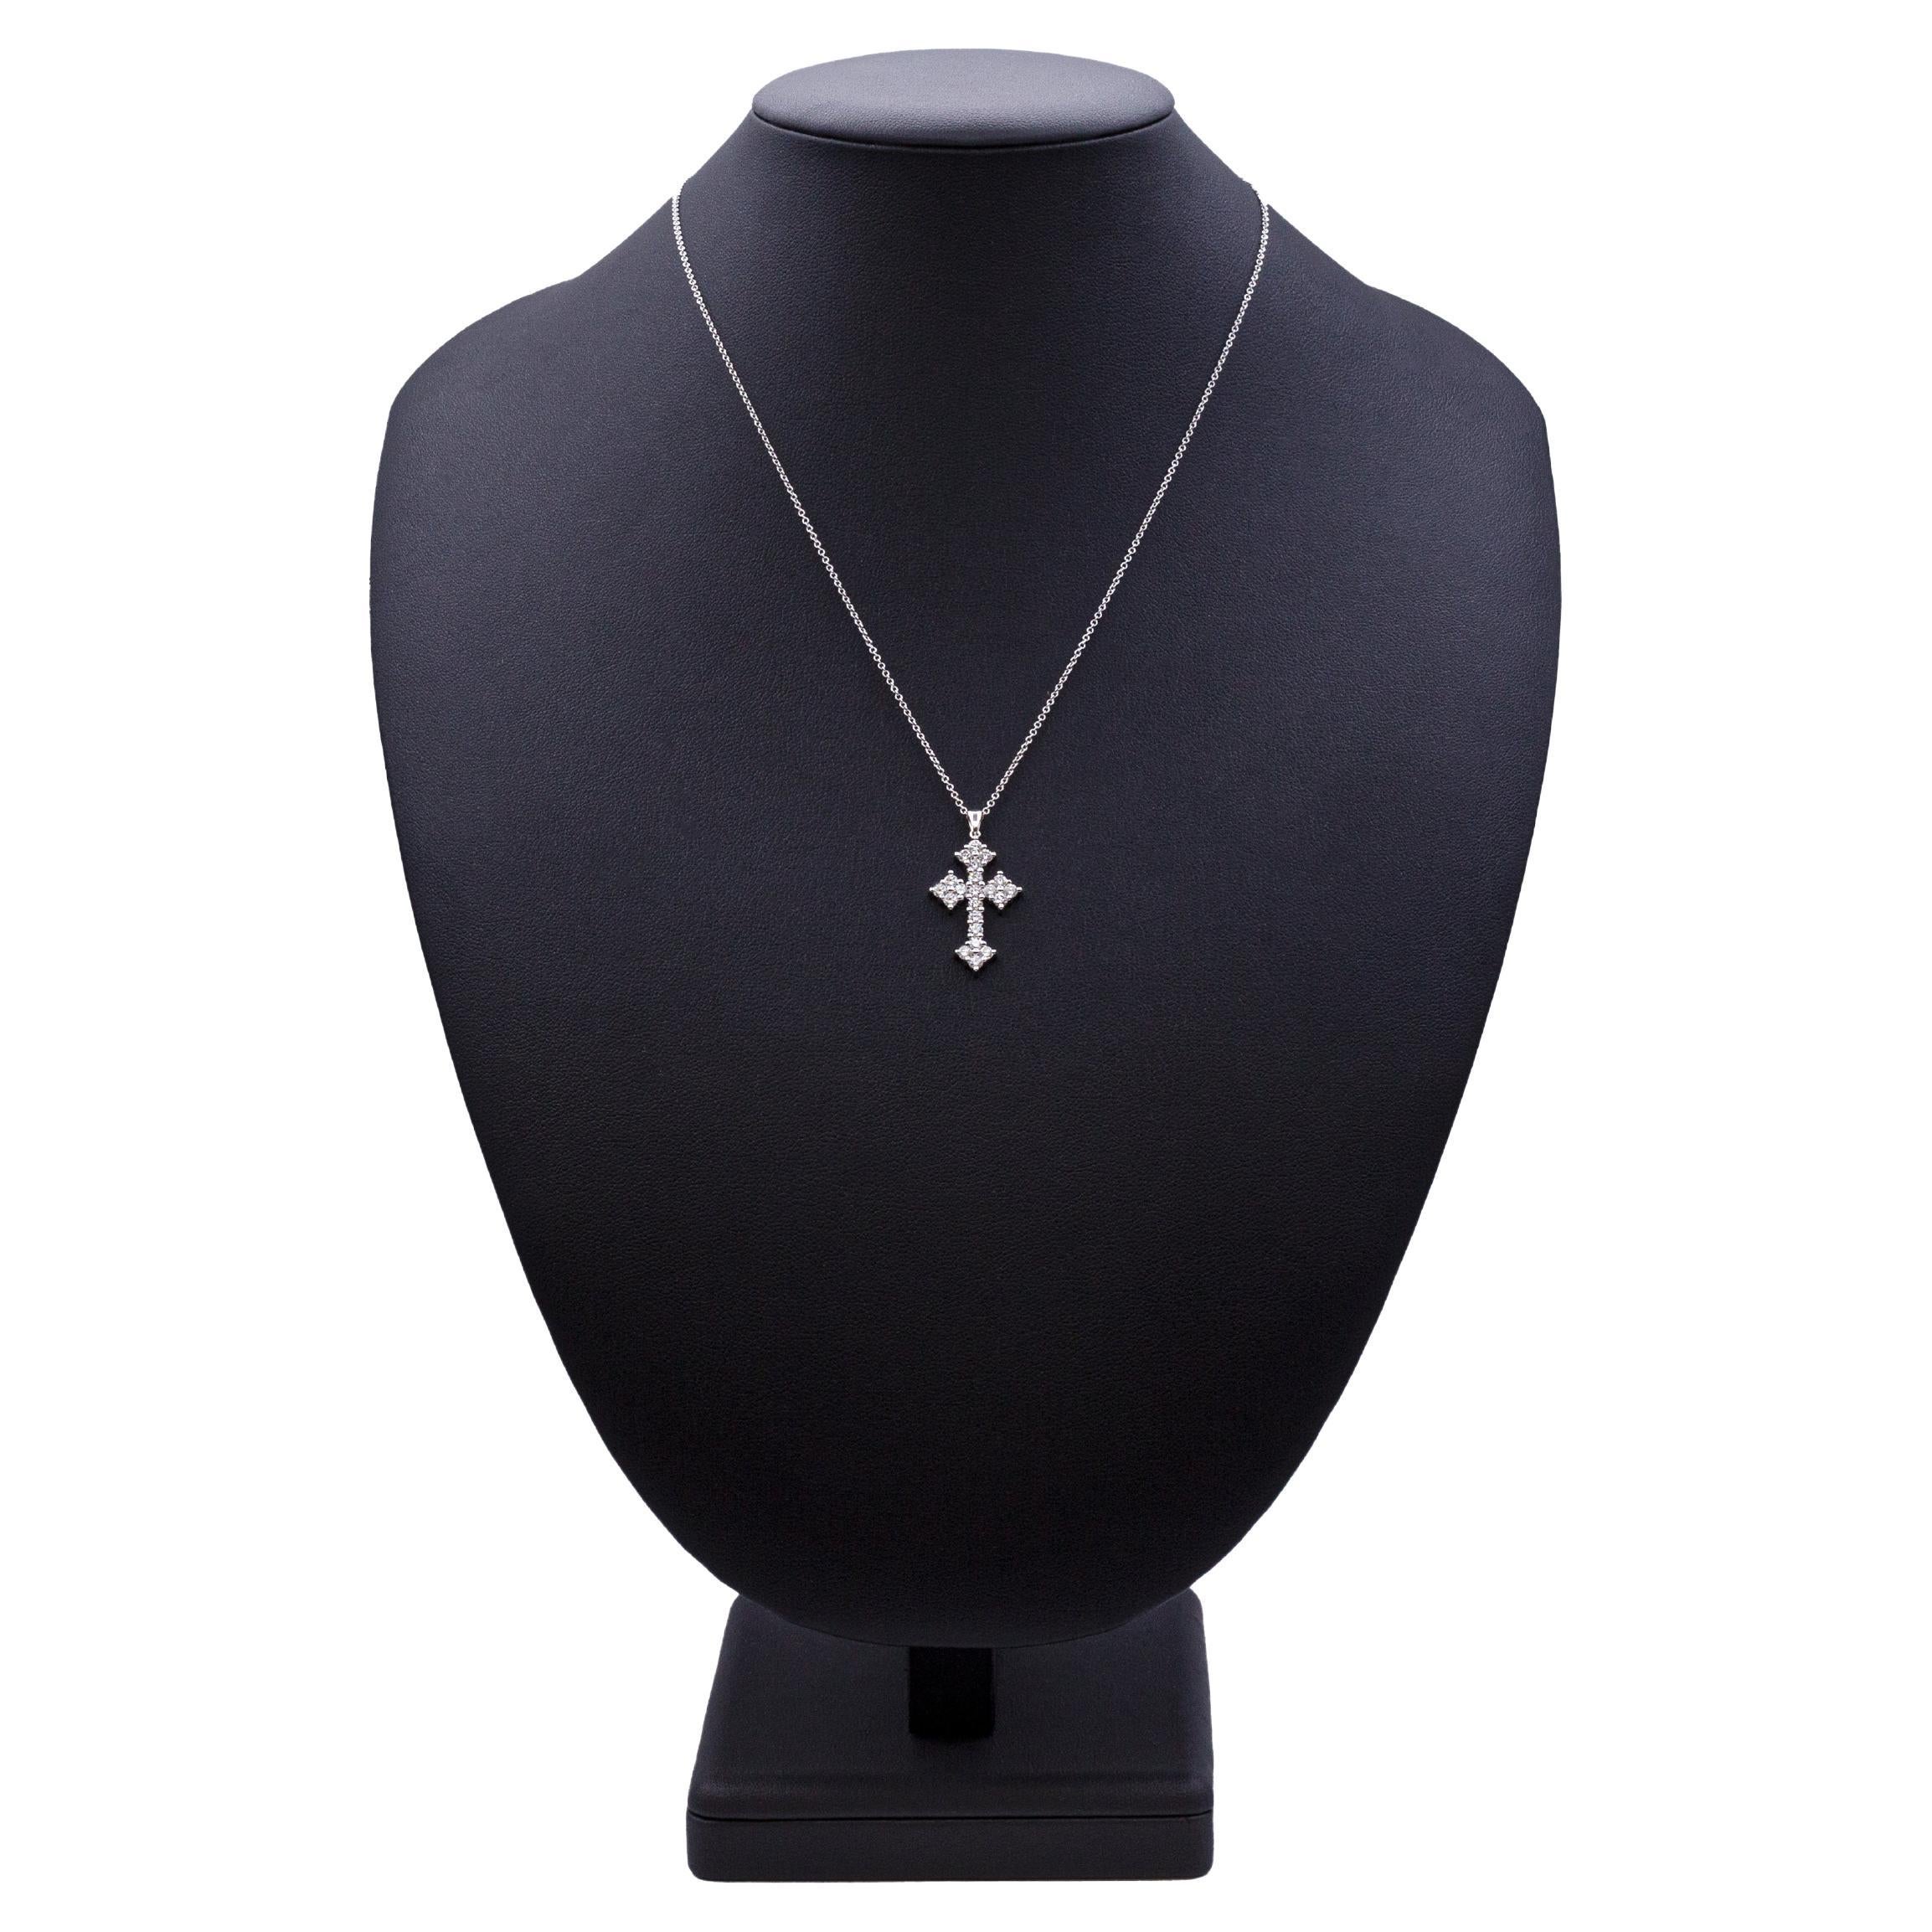 Diamond Cross Necklace in 14K White Gold